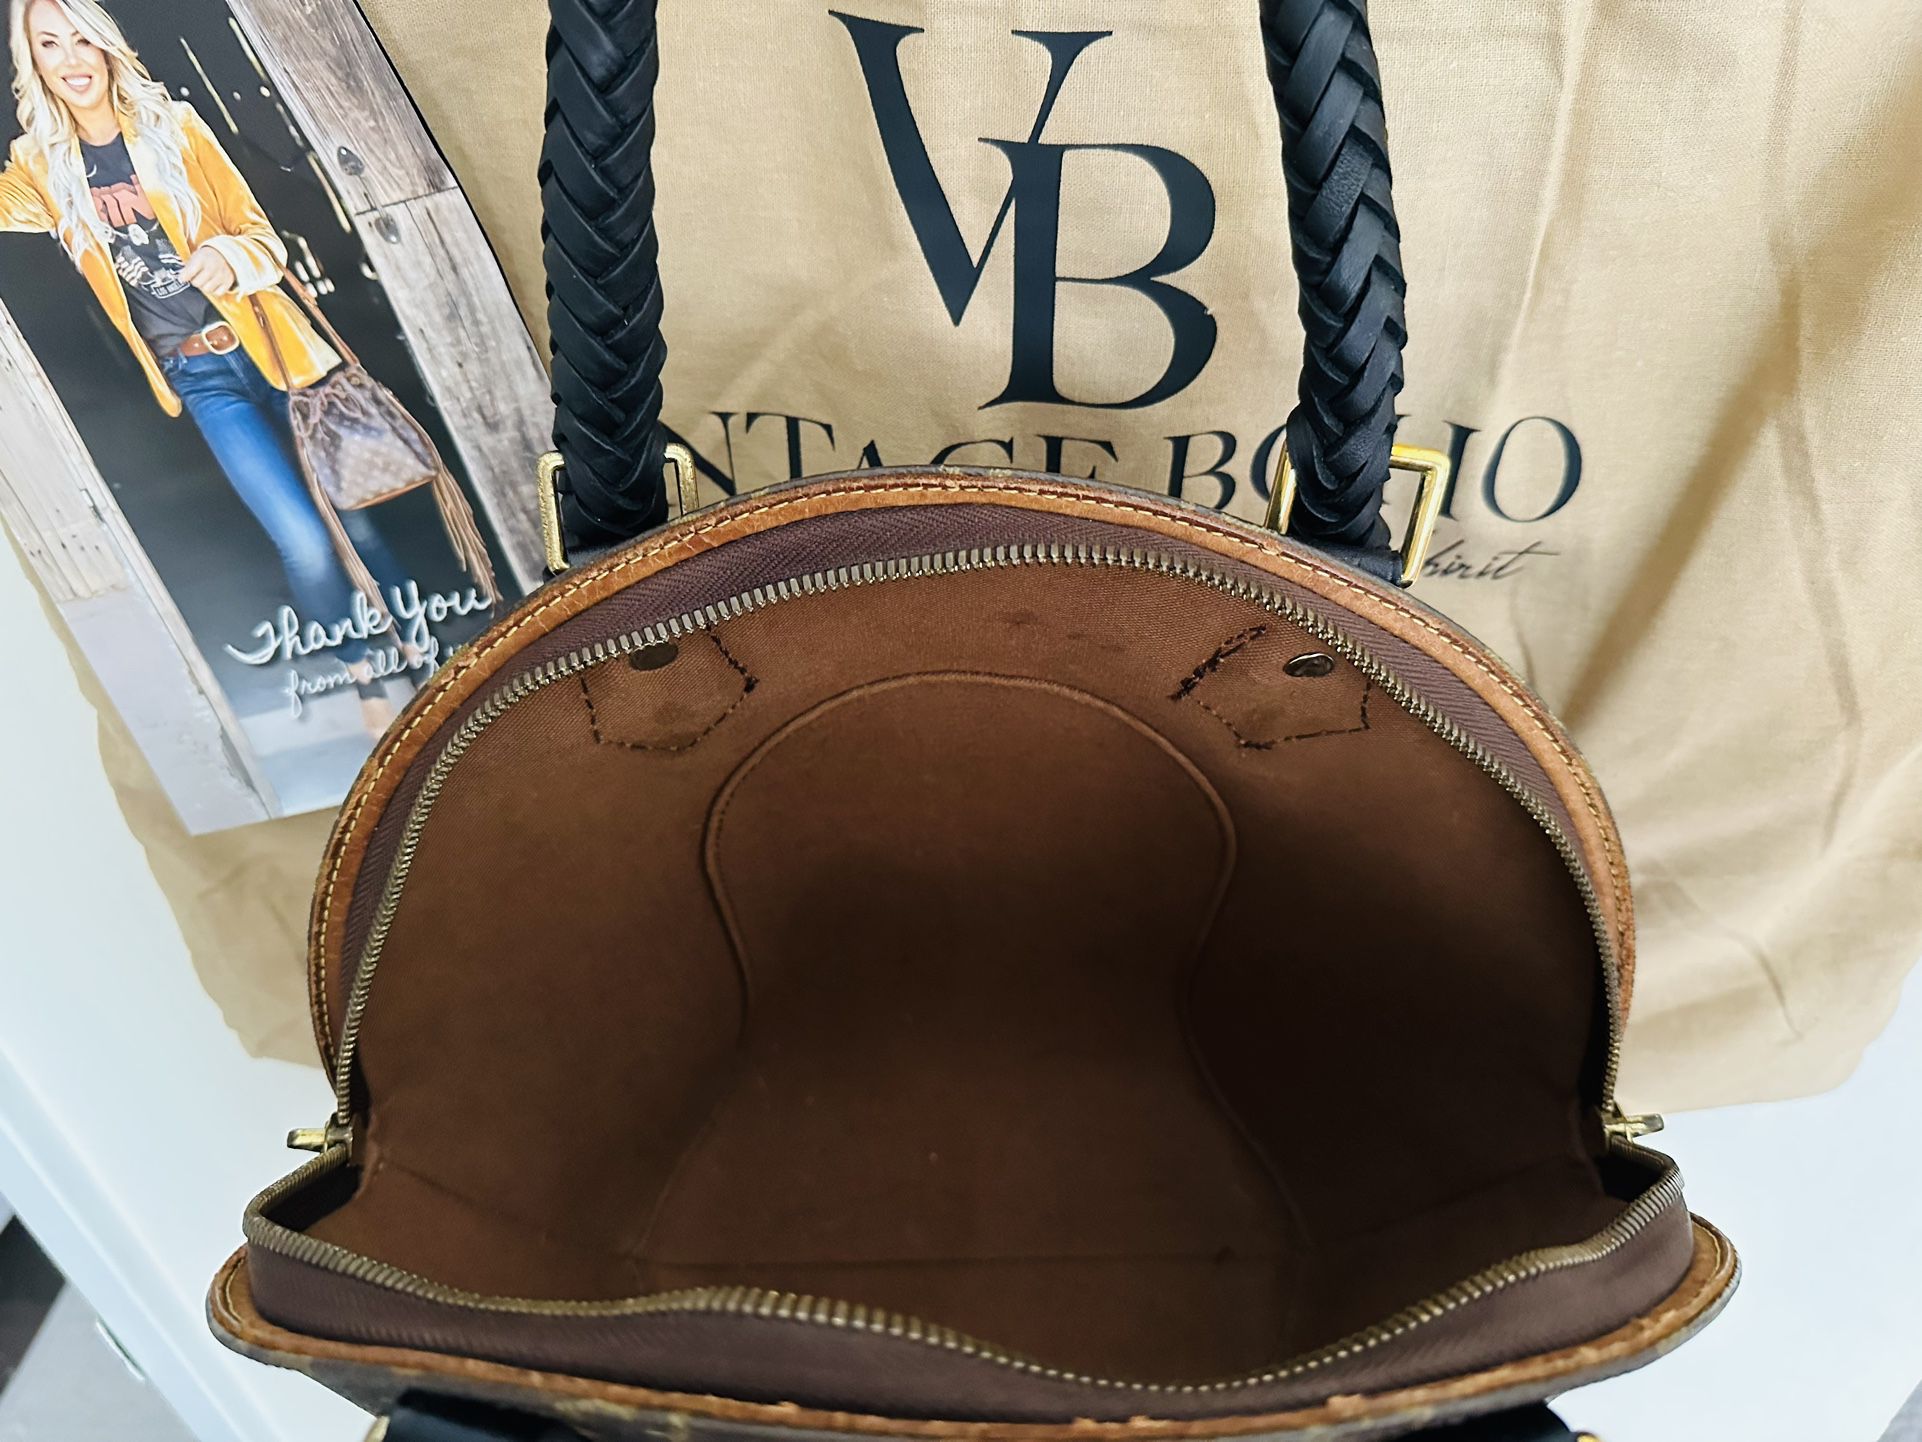 Authentic Louis Vuitton, vintage BoHo bag **Perfect For Stagecoach